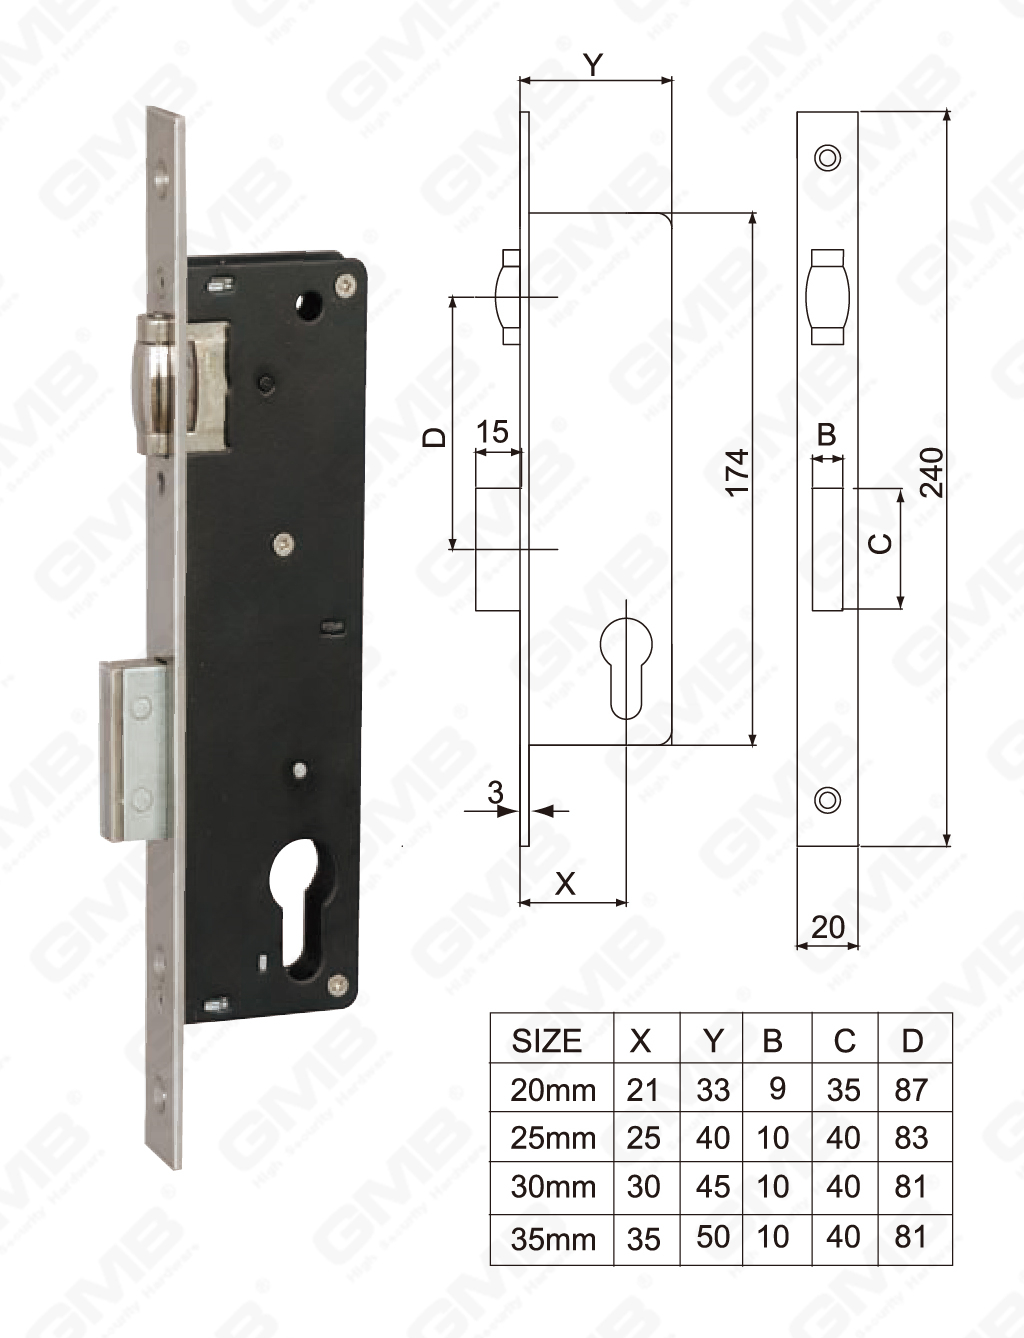 03 Narrow Lock_Z035R-2-K1-02